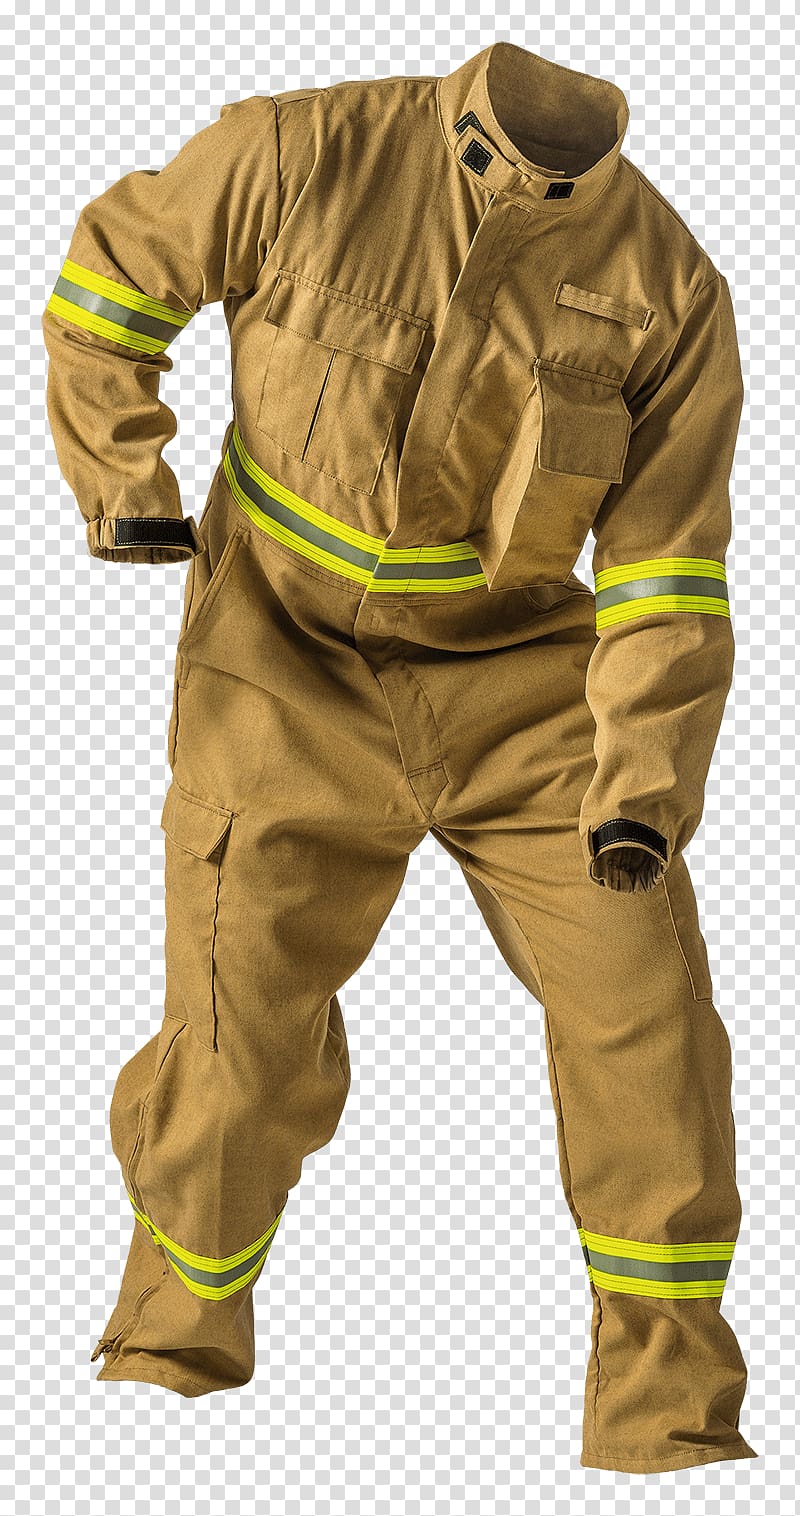 Firefighter Bunker gear Boilersuit Hazardous Material Suits Personal protective equipment, Bi-color Package Design transparent background PNG clipart